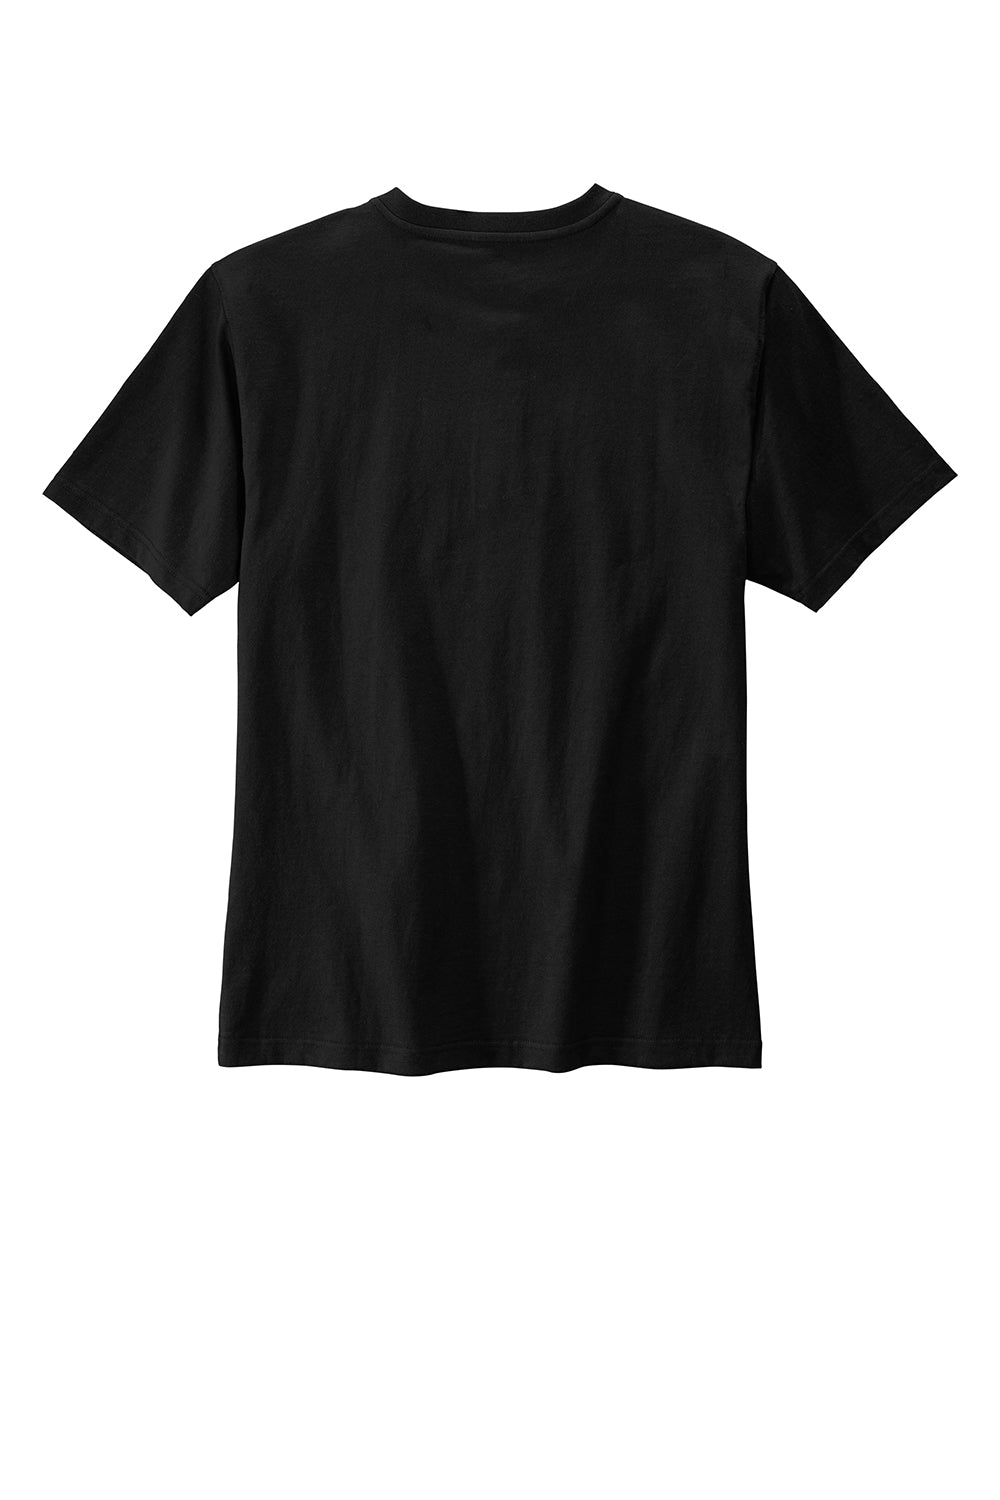 Carhartt CTK84 Mens Short Sleeve Henley T-Shirt w/ Pocket Black Flat Back